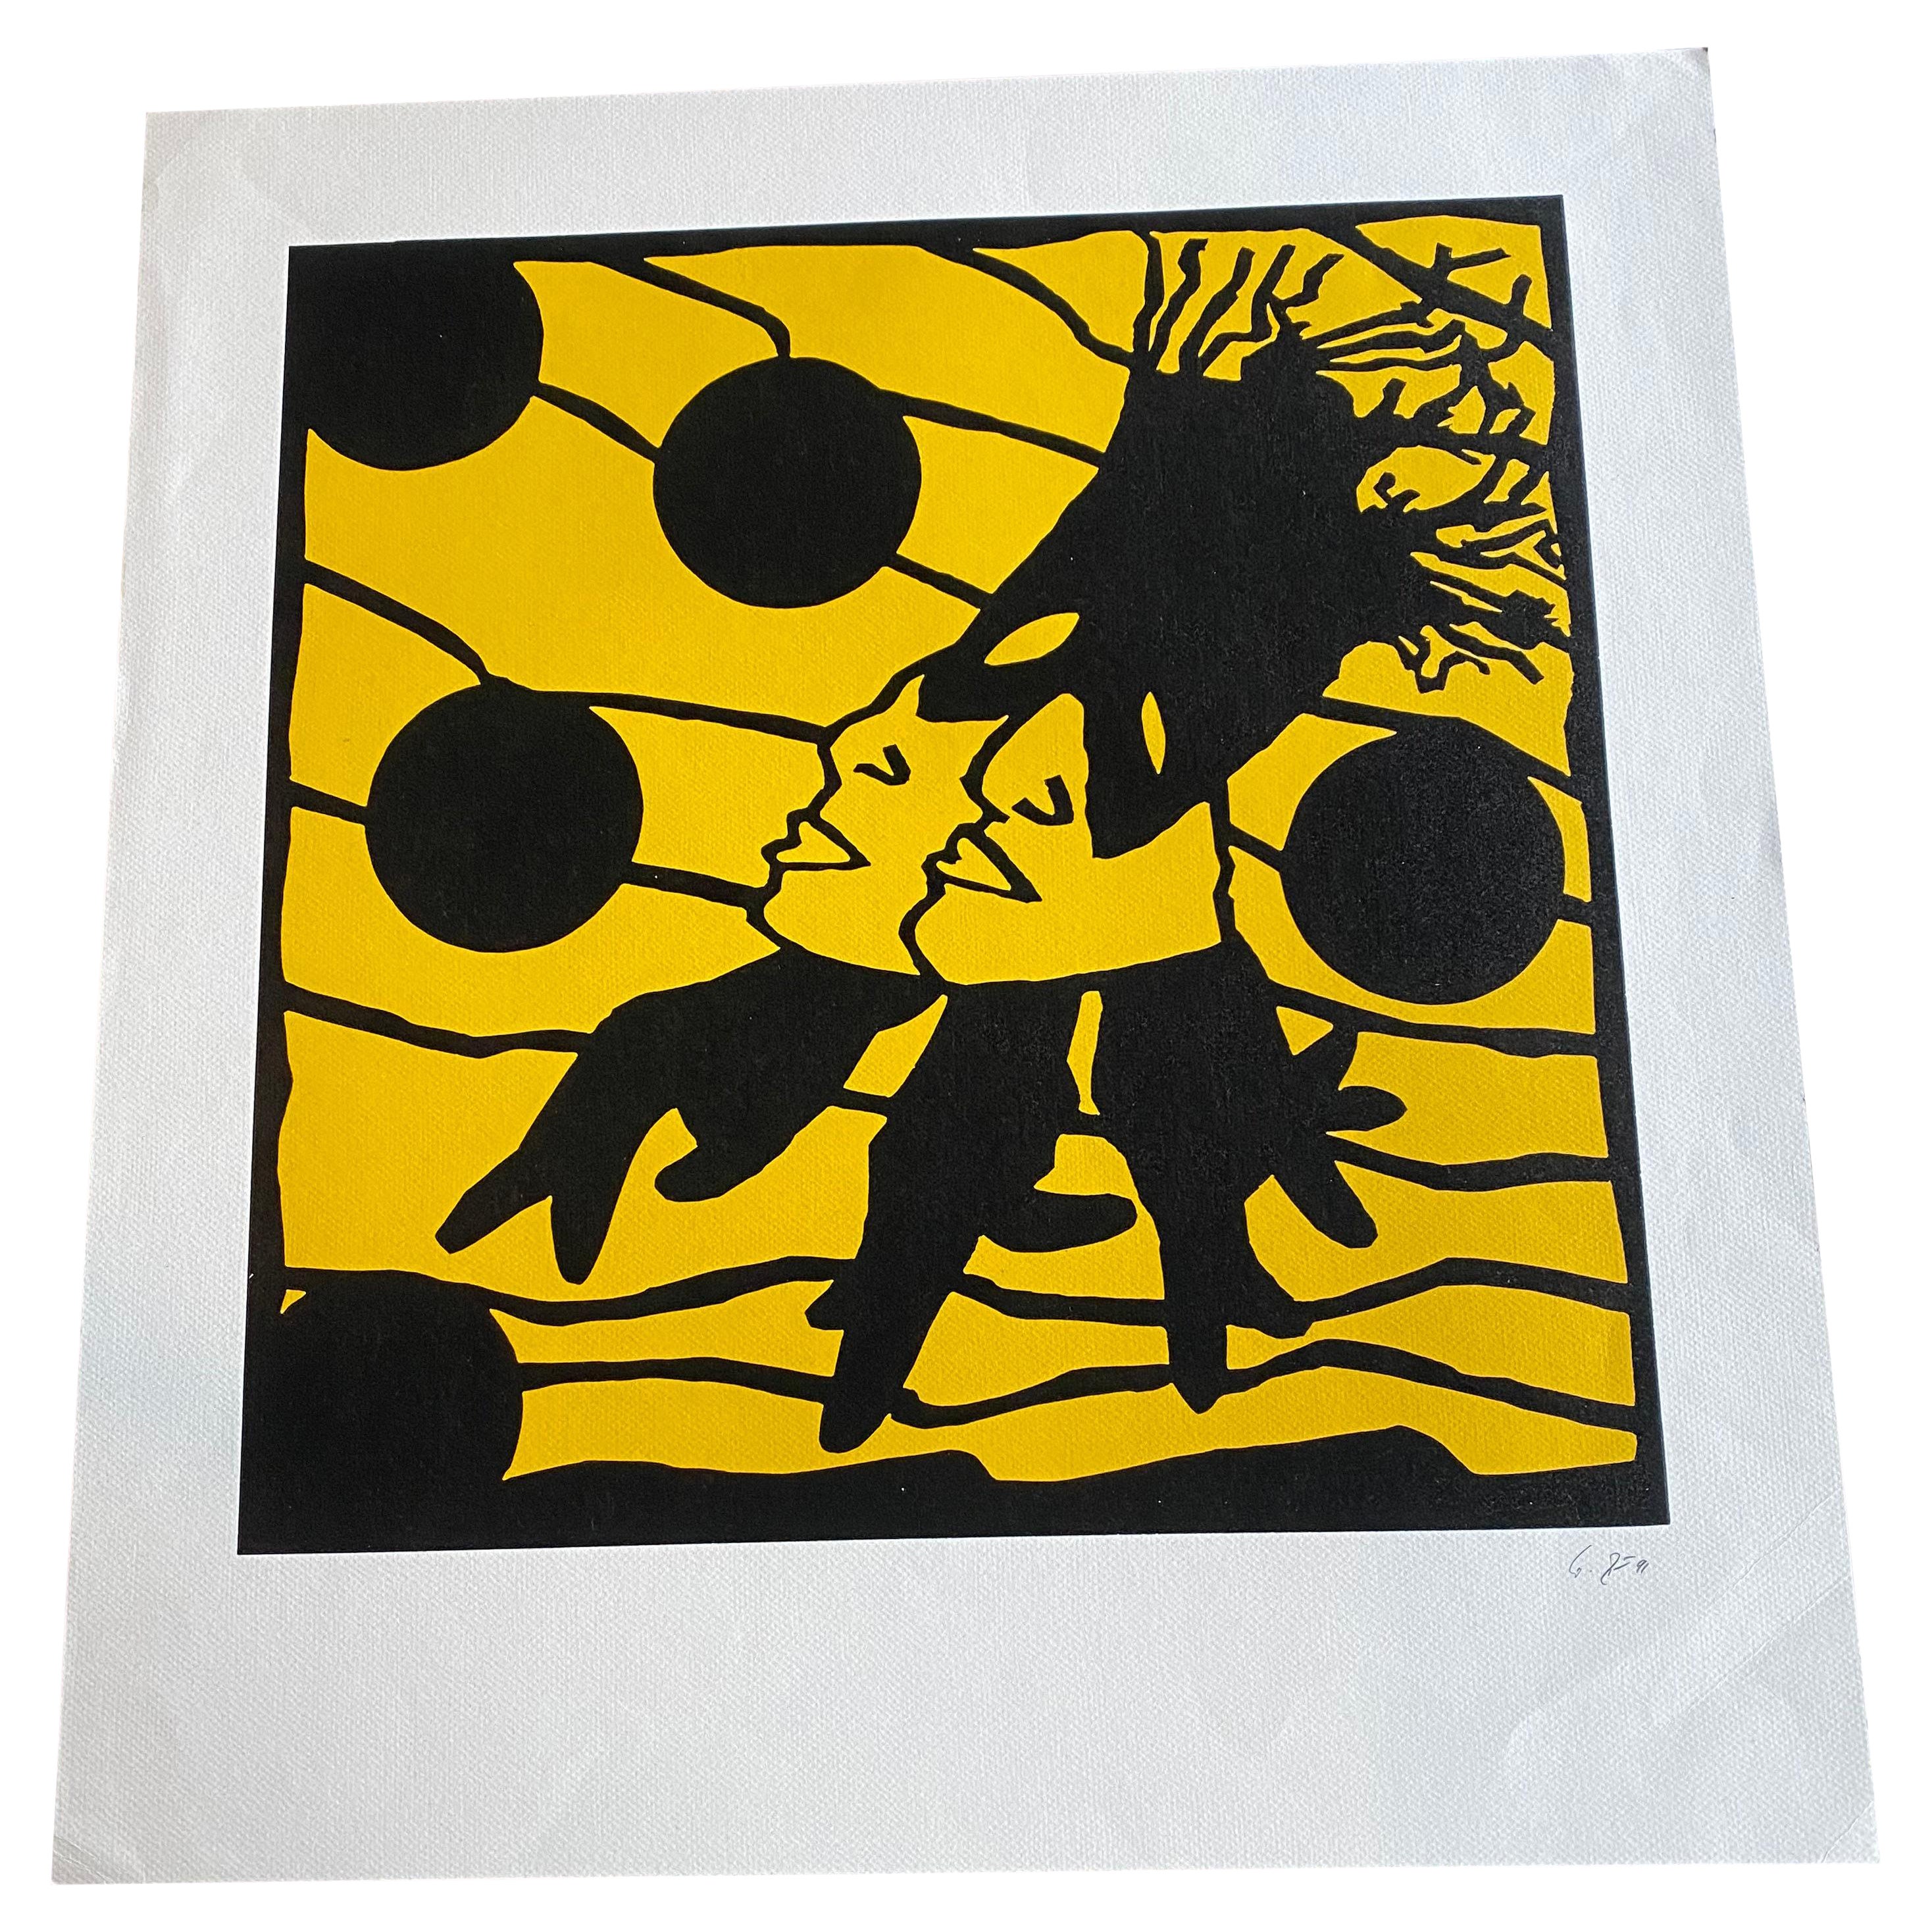 Original Color Linocut by Werner Büttner "Nachleben" in Yellow and Black